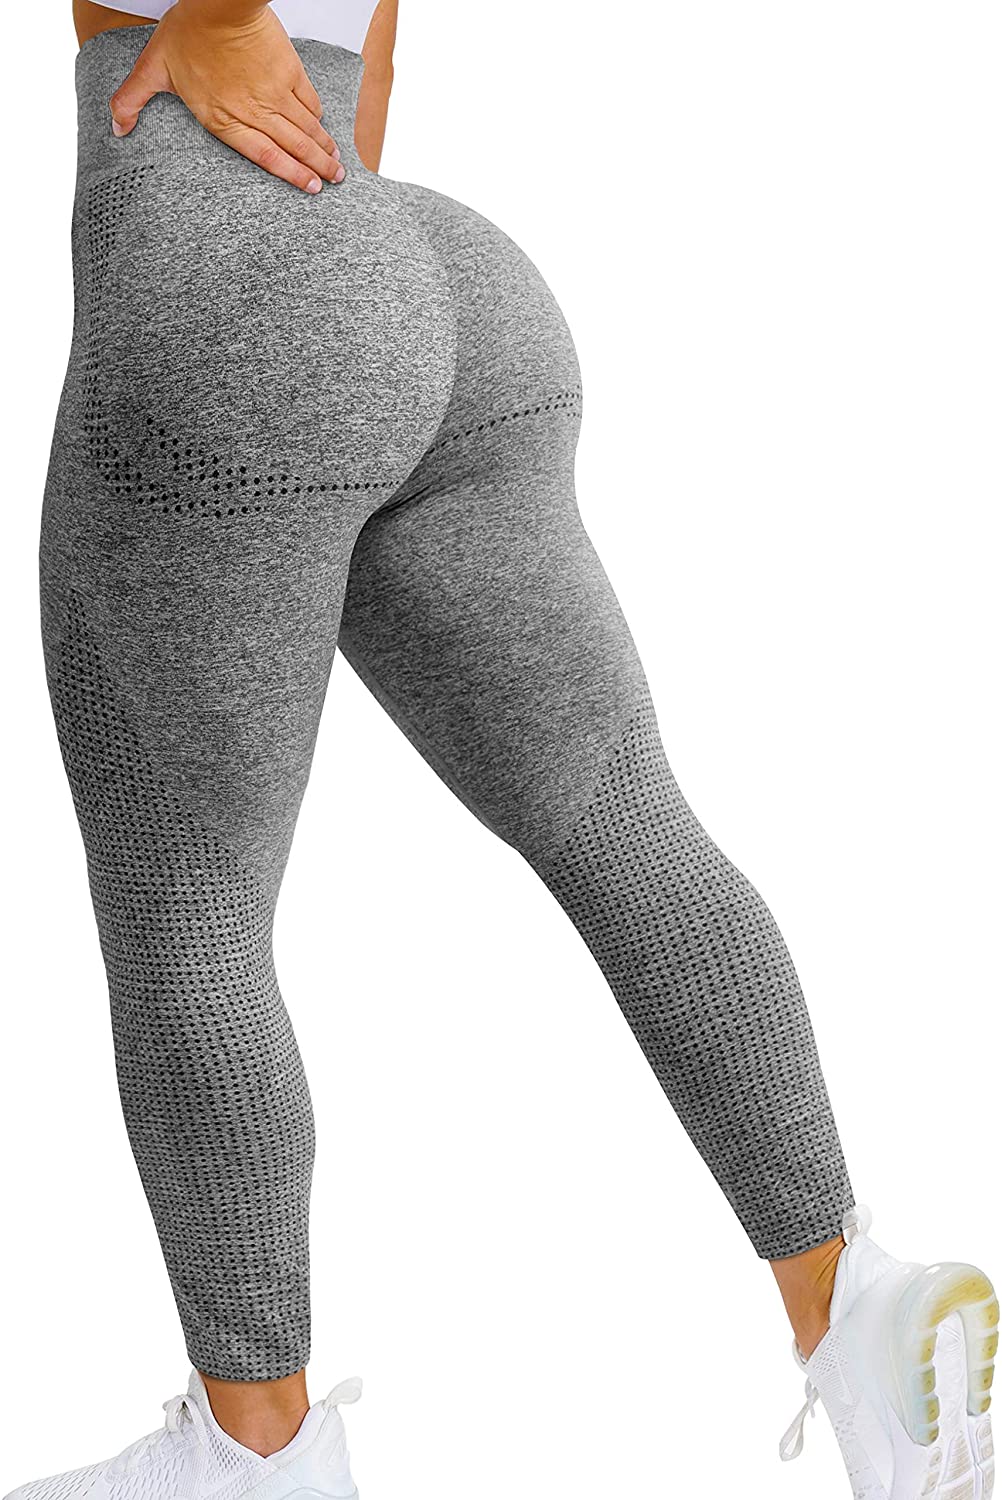 QOQ Women's Seamless Leggings High Waist Gym Running Vital Yoga Pants Butt Lift Workout Tights Tummy Control 